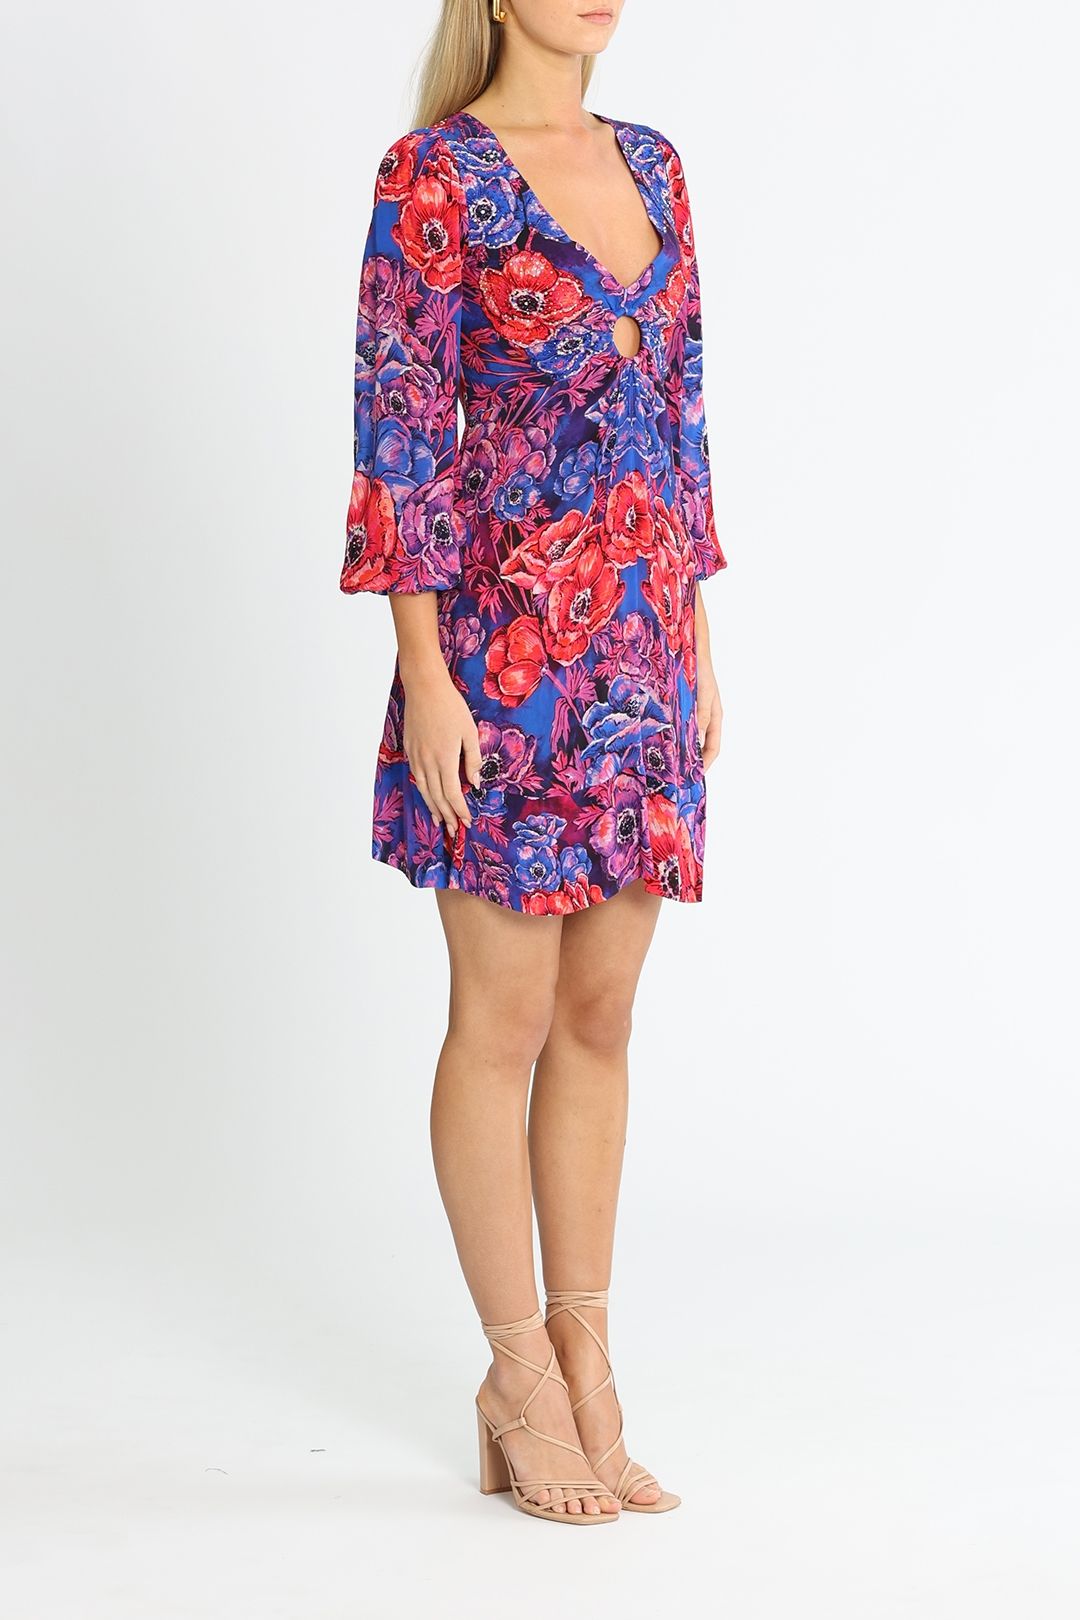 Czarina Purple Poppy Short Dress Cutout